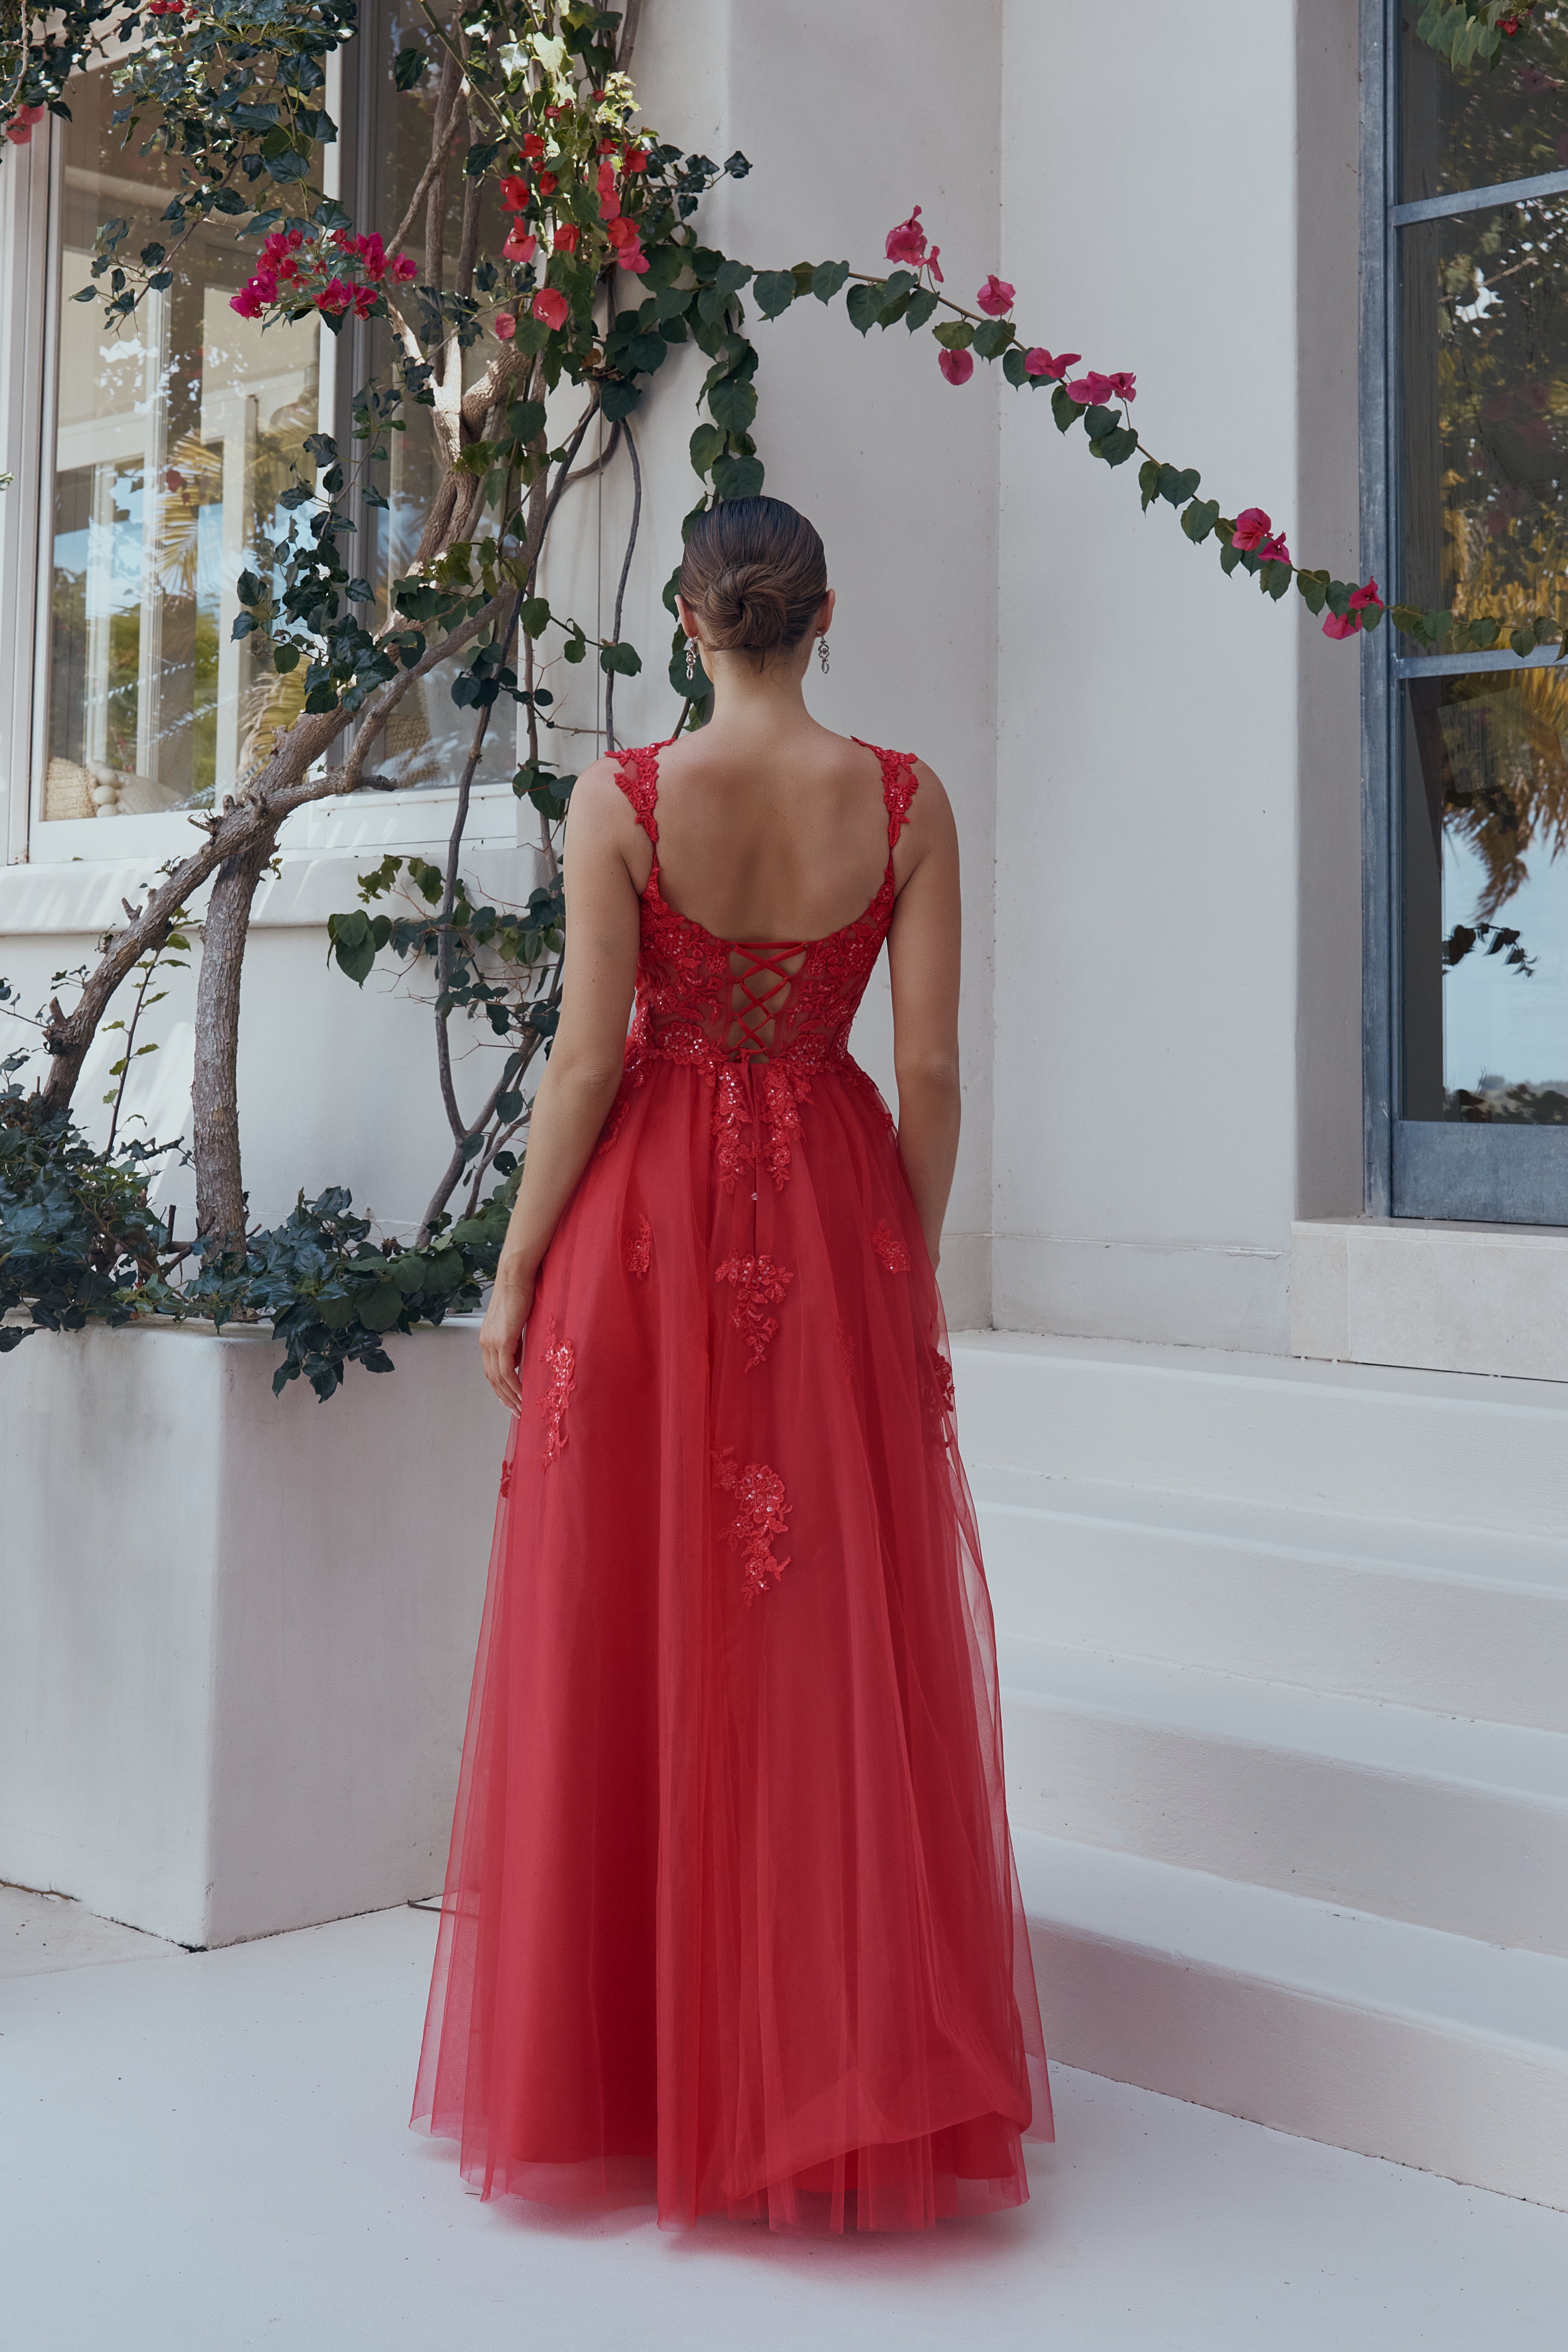 Posie PO2318 by Tania Olsen Red Formal Dress